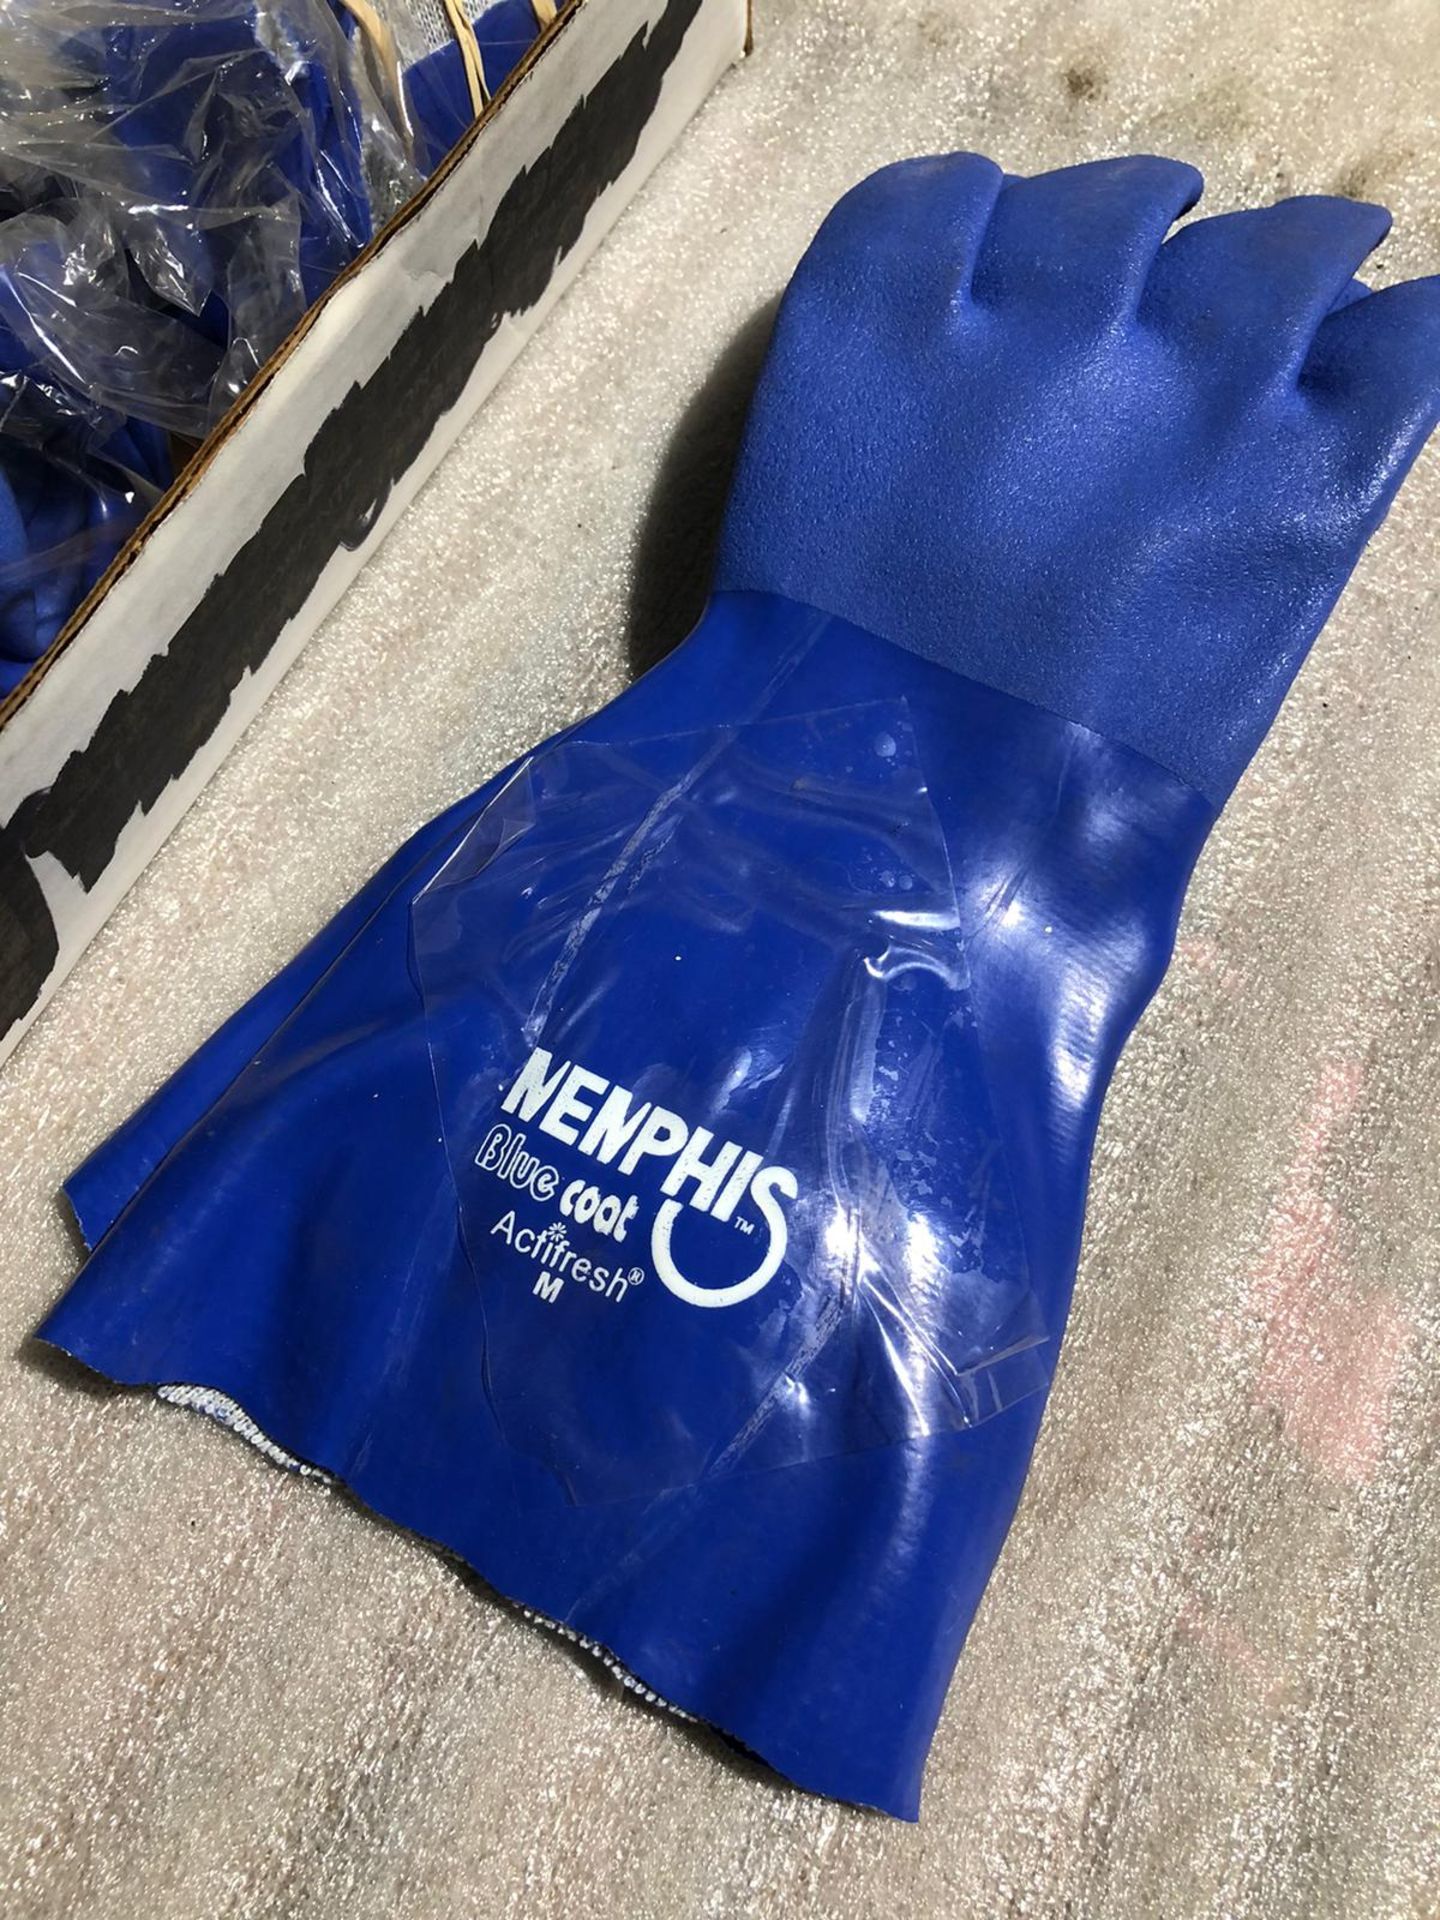 Memphis Blue Coat Waterproof Gloves - 7 pairs - Size M - Image 2 of 3